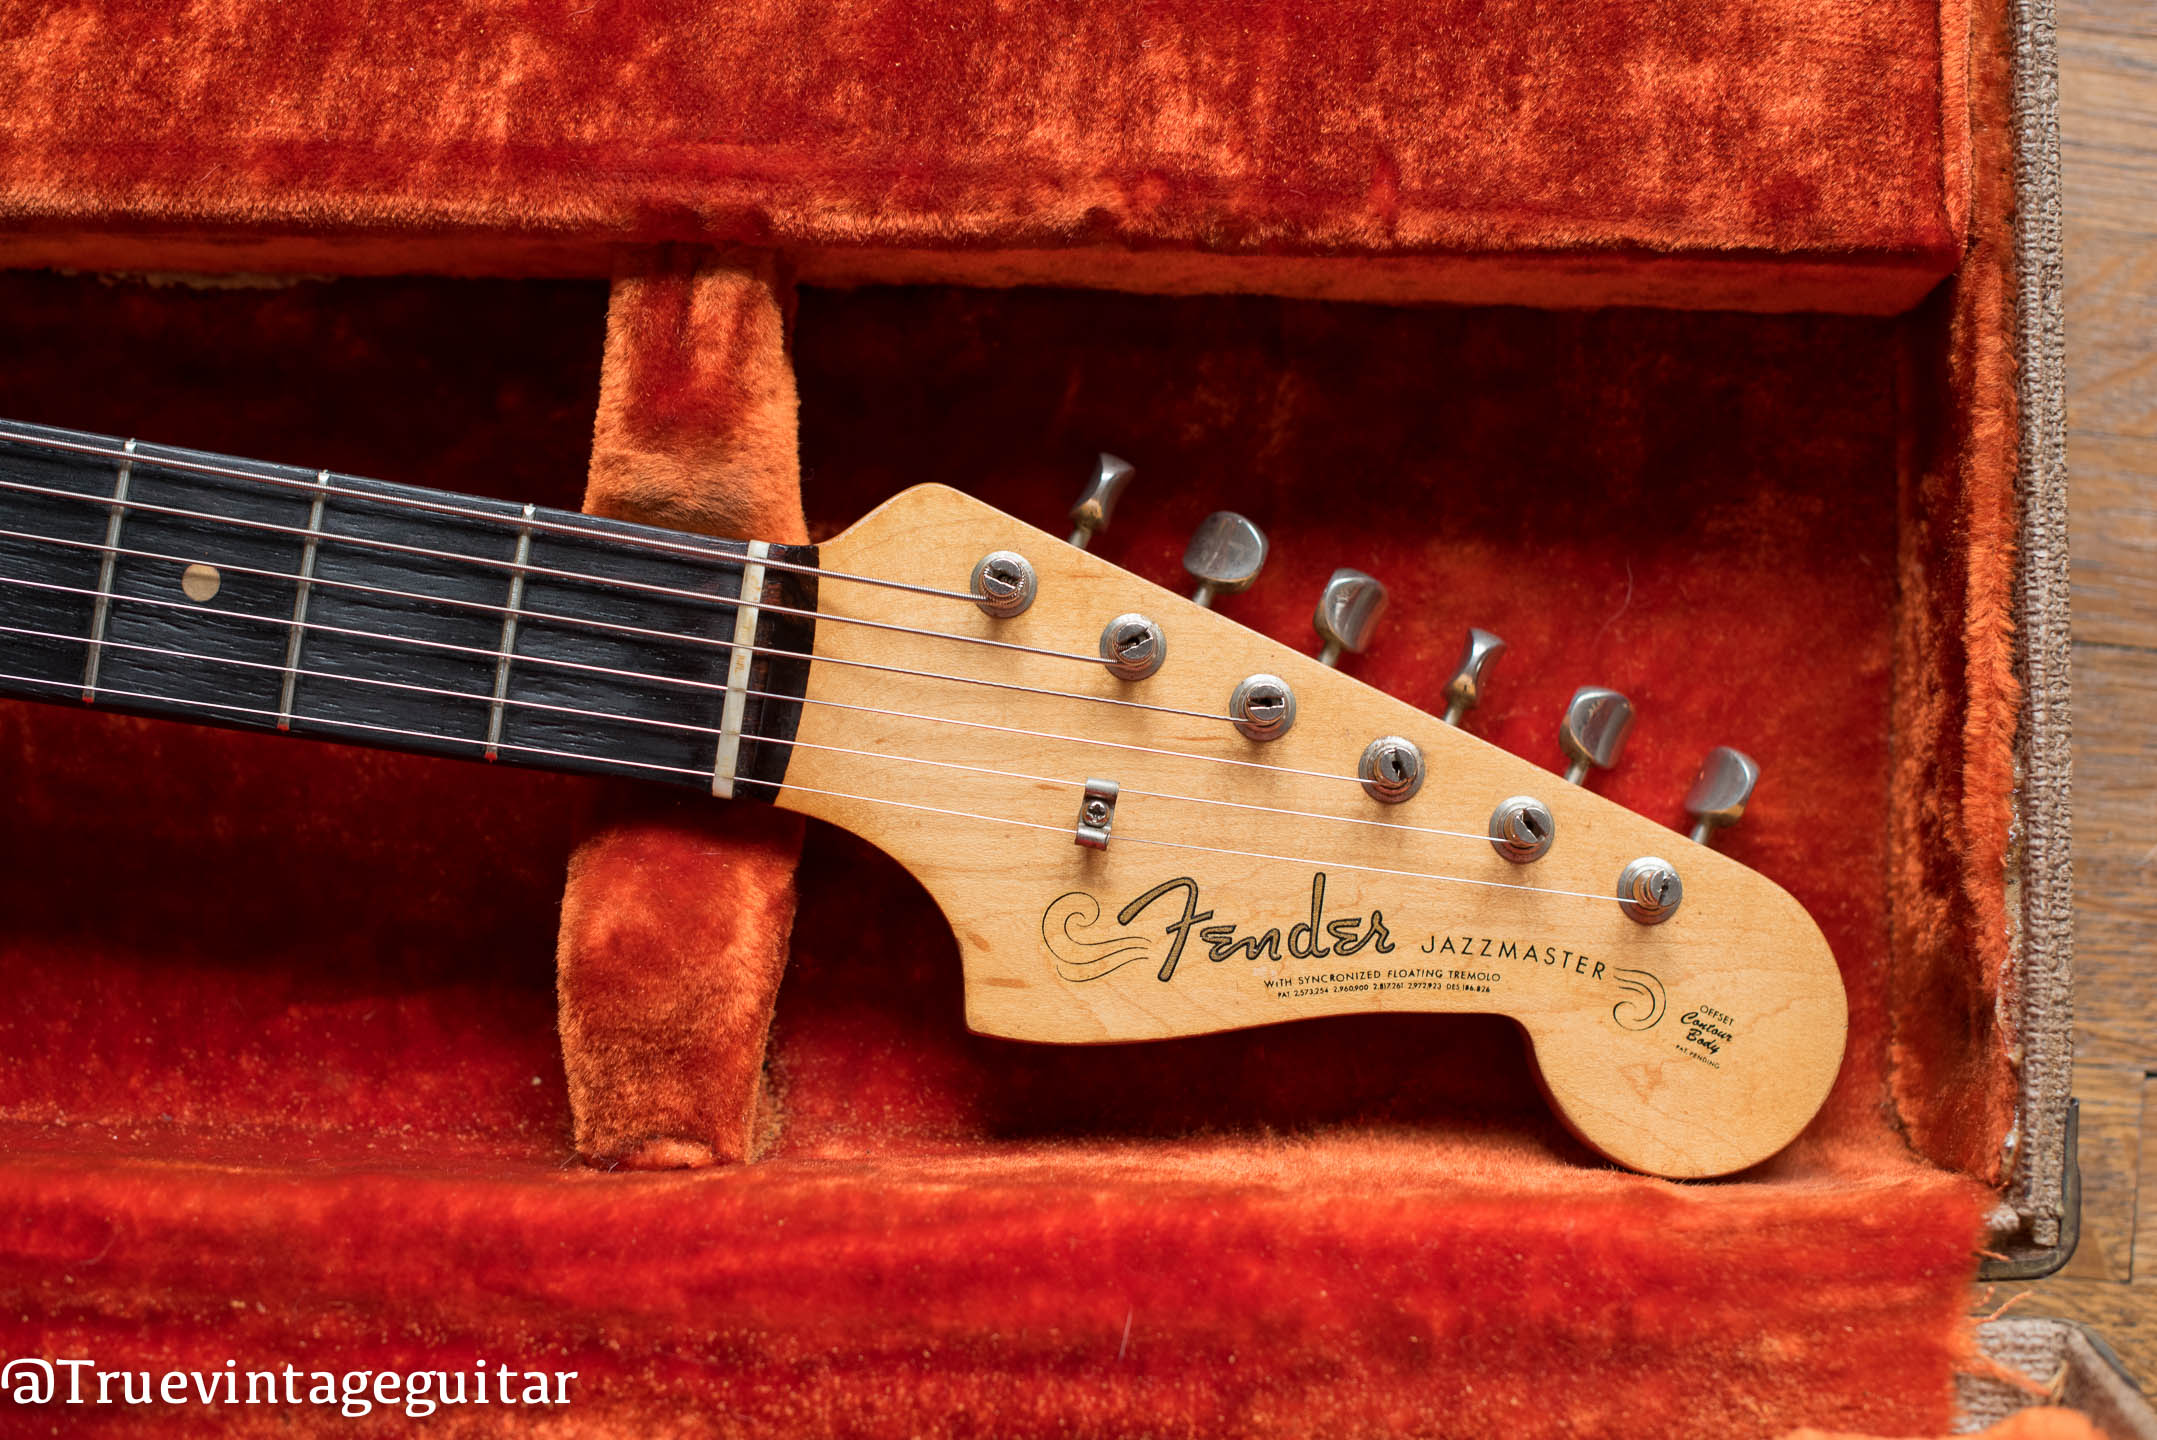 Headstock, Vintage 1962 Fender Jazzmaster electric guitar